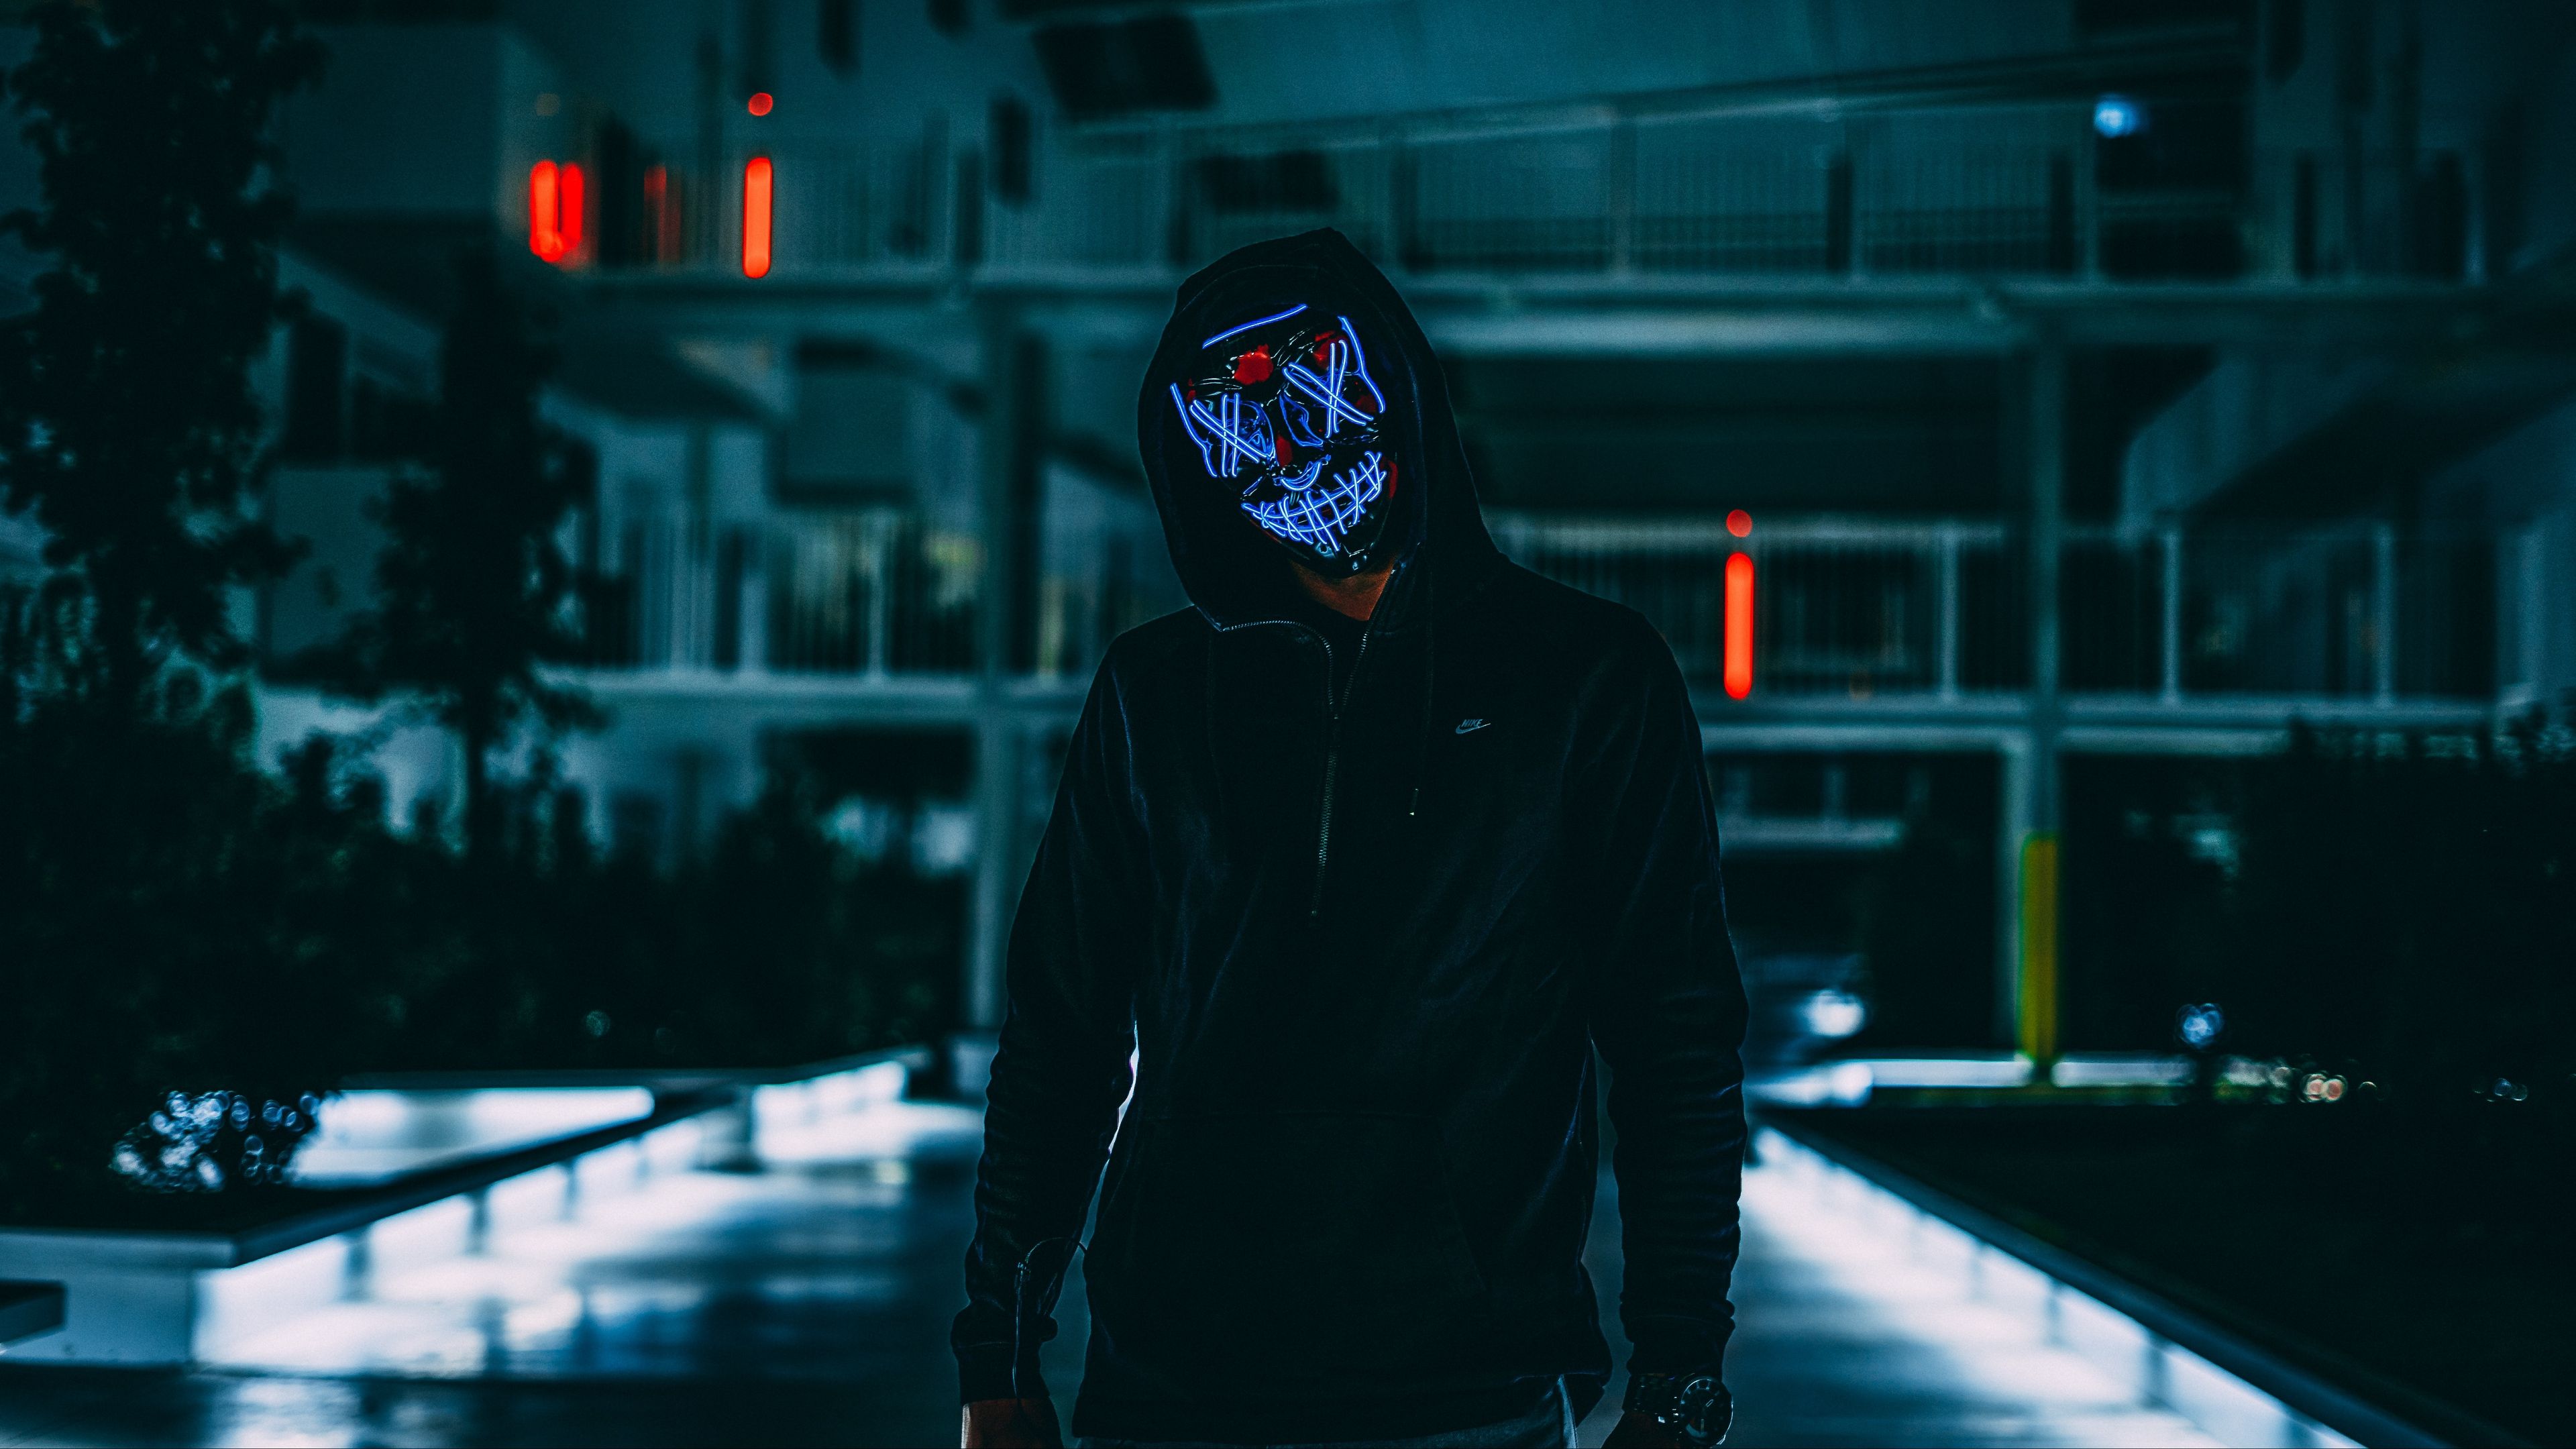 Neon Mask Wallpaper